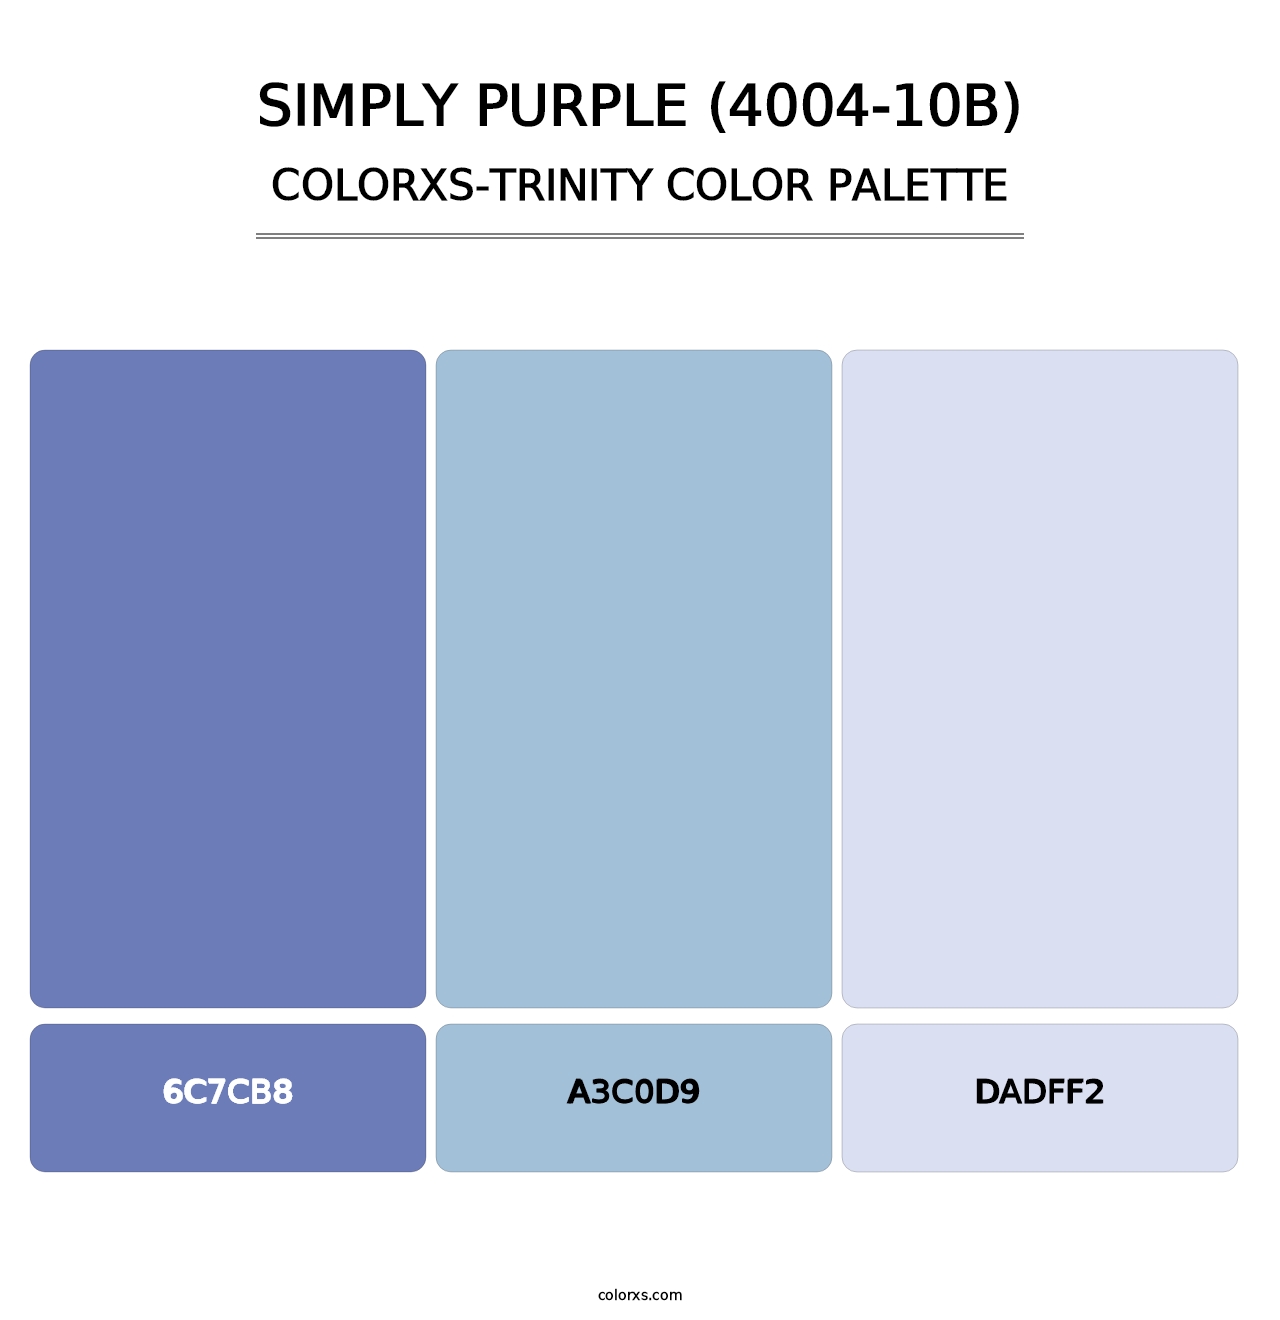 Simply Purple (4004-10B) - Colorxs Trinity Palette